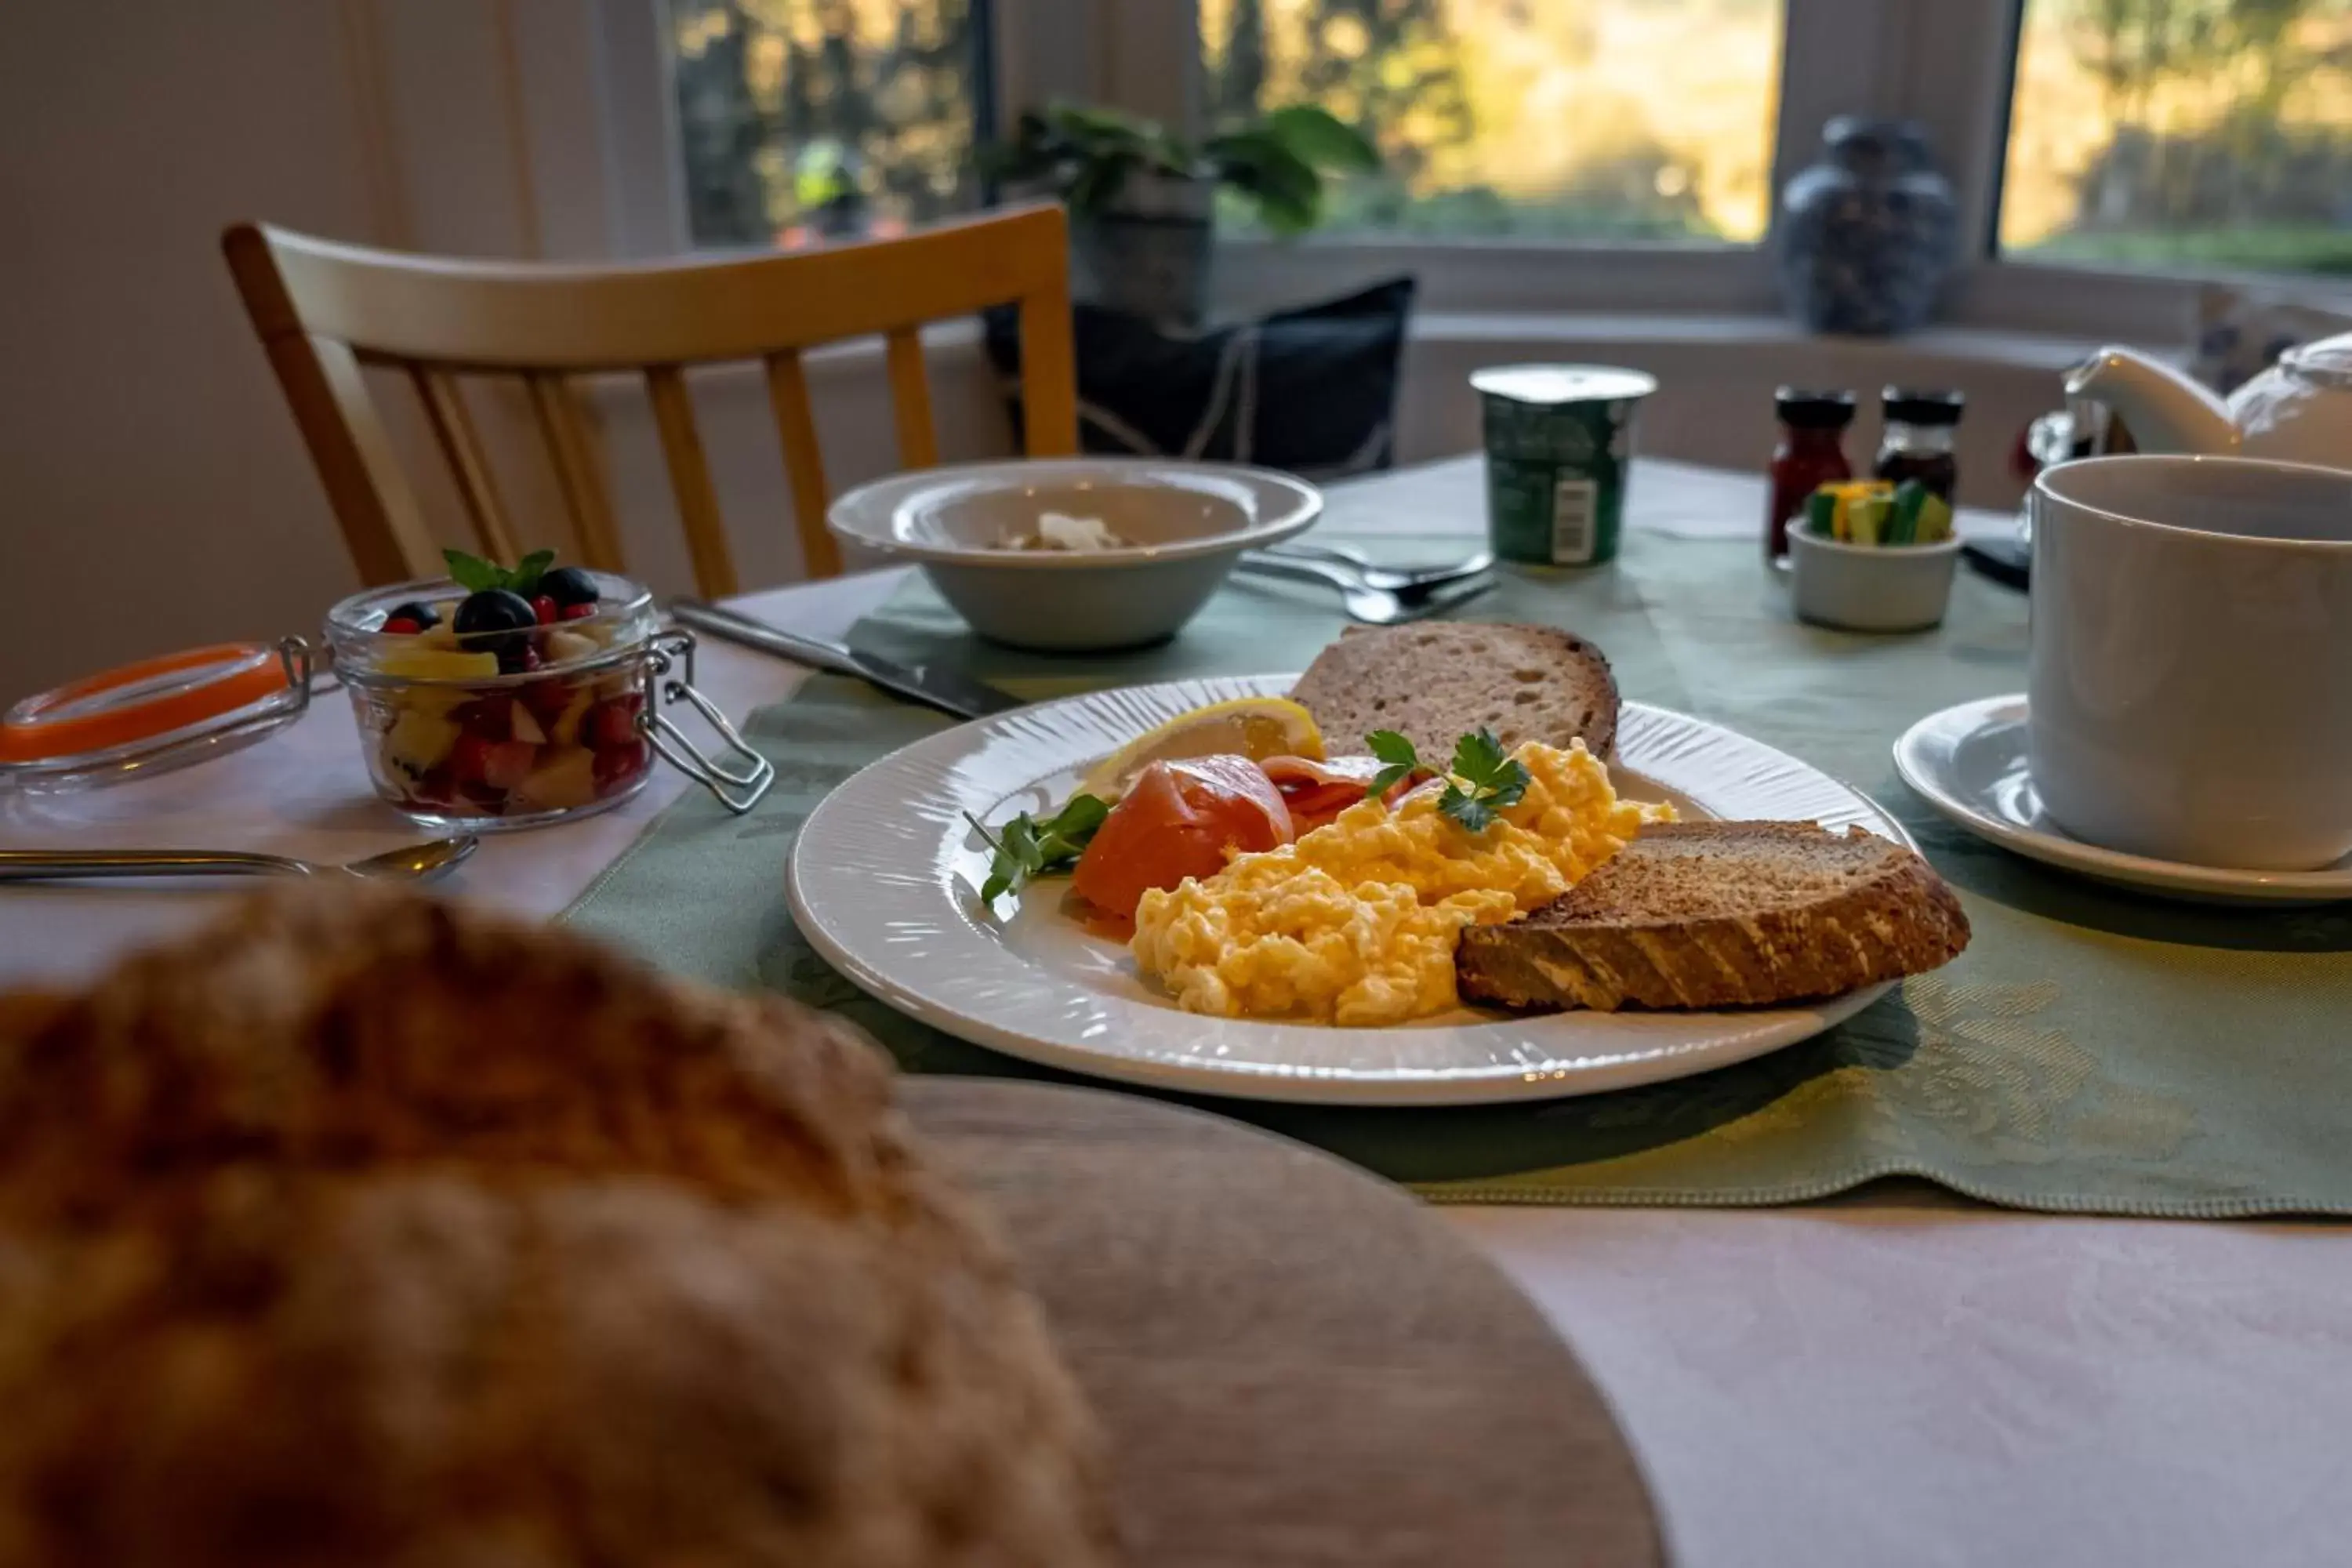 Breakfast in Glyntwrog House